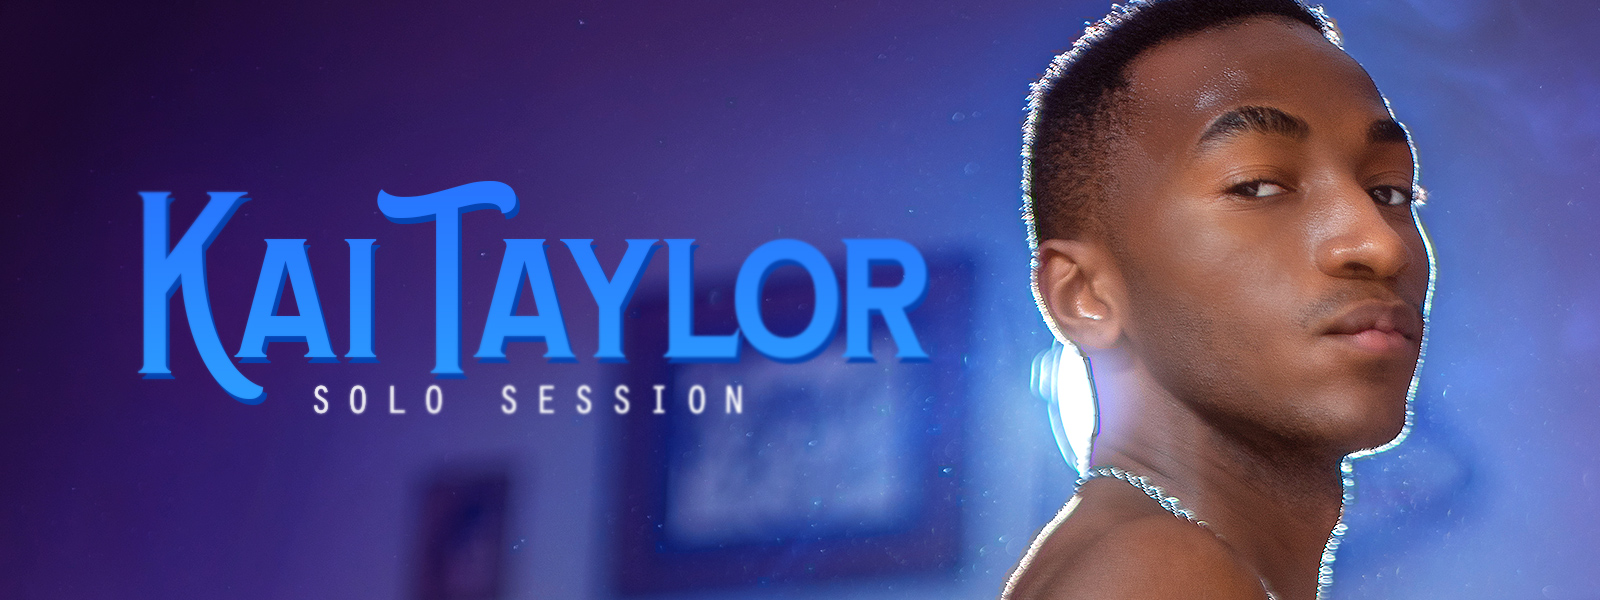 Kai Taylor Solo Session